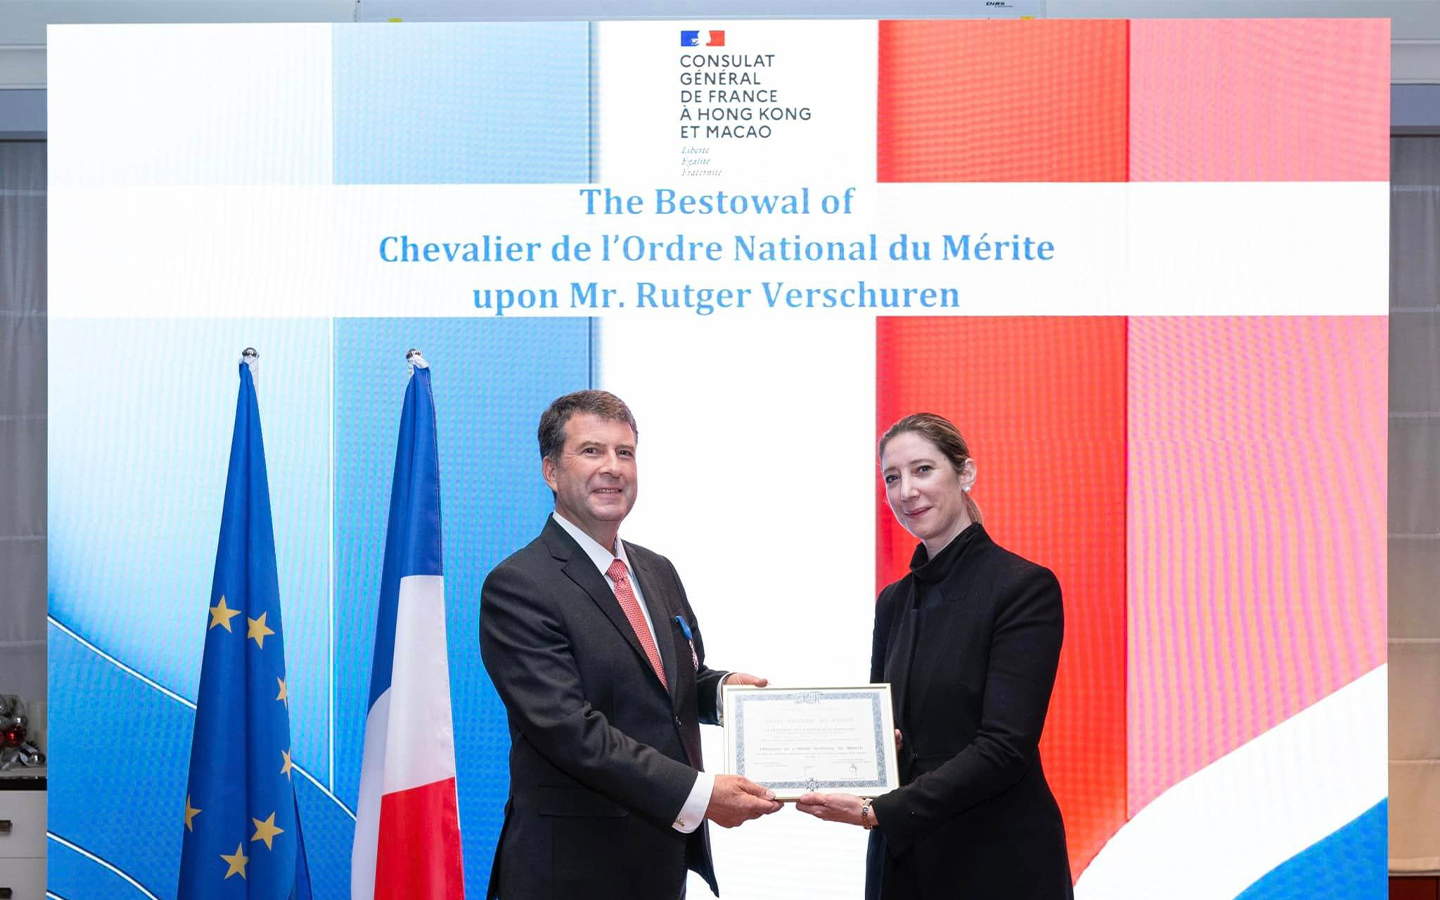 Rutger Verschuren has been awarded France’s second highest order of merit